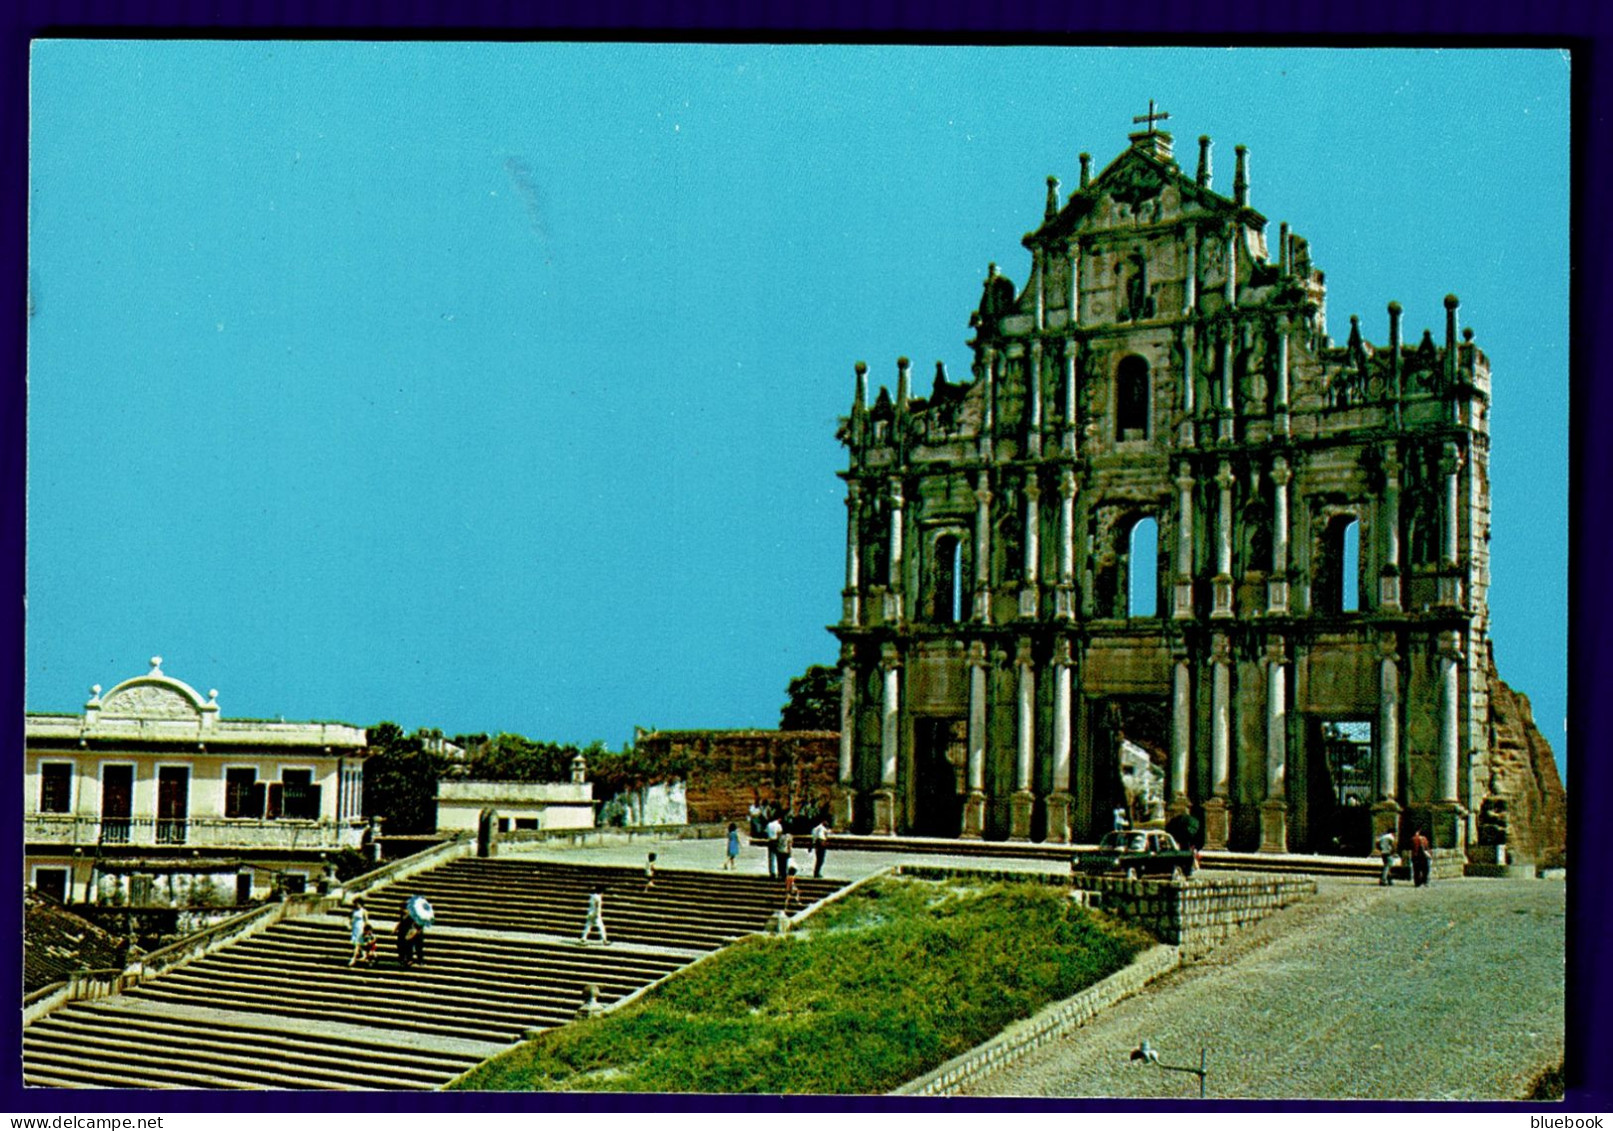 Ref 1647 - Macau Macao Postcard - The Ruins Of St Paul's - Ex Portugal Colony - Macao